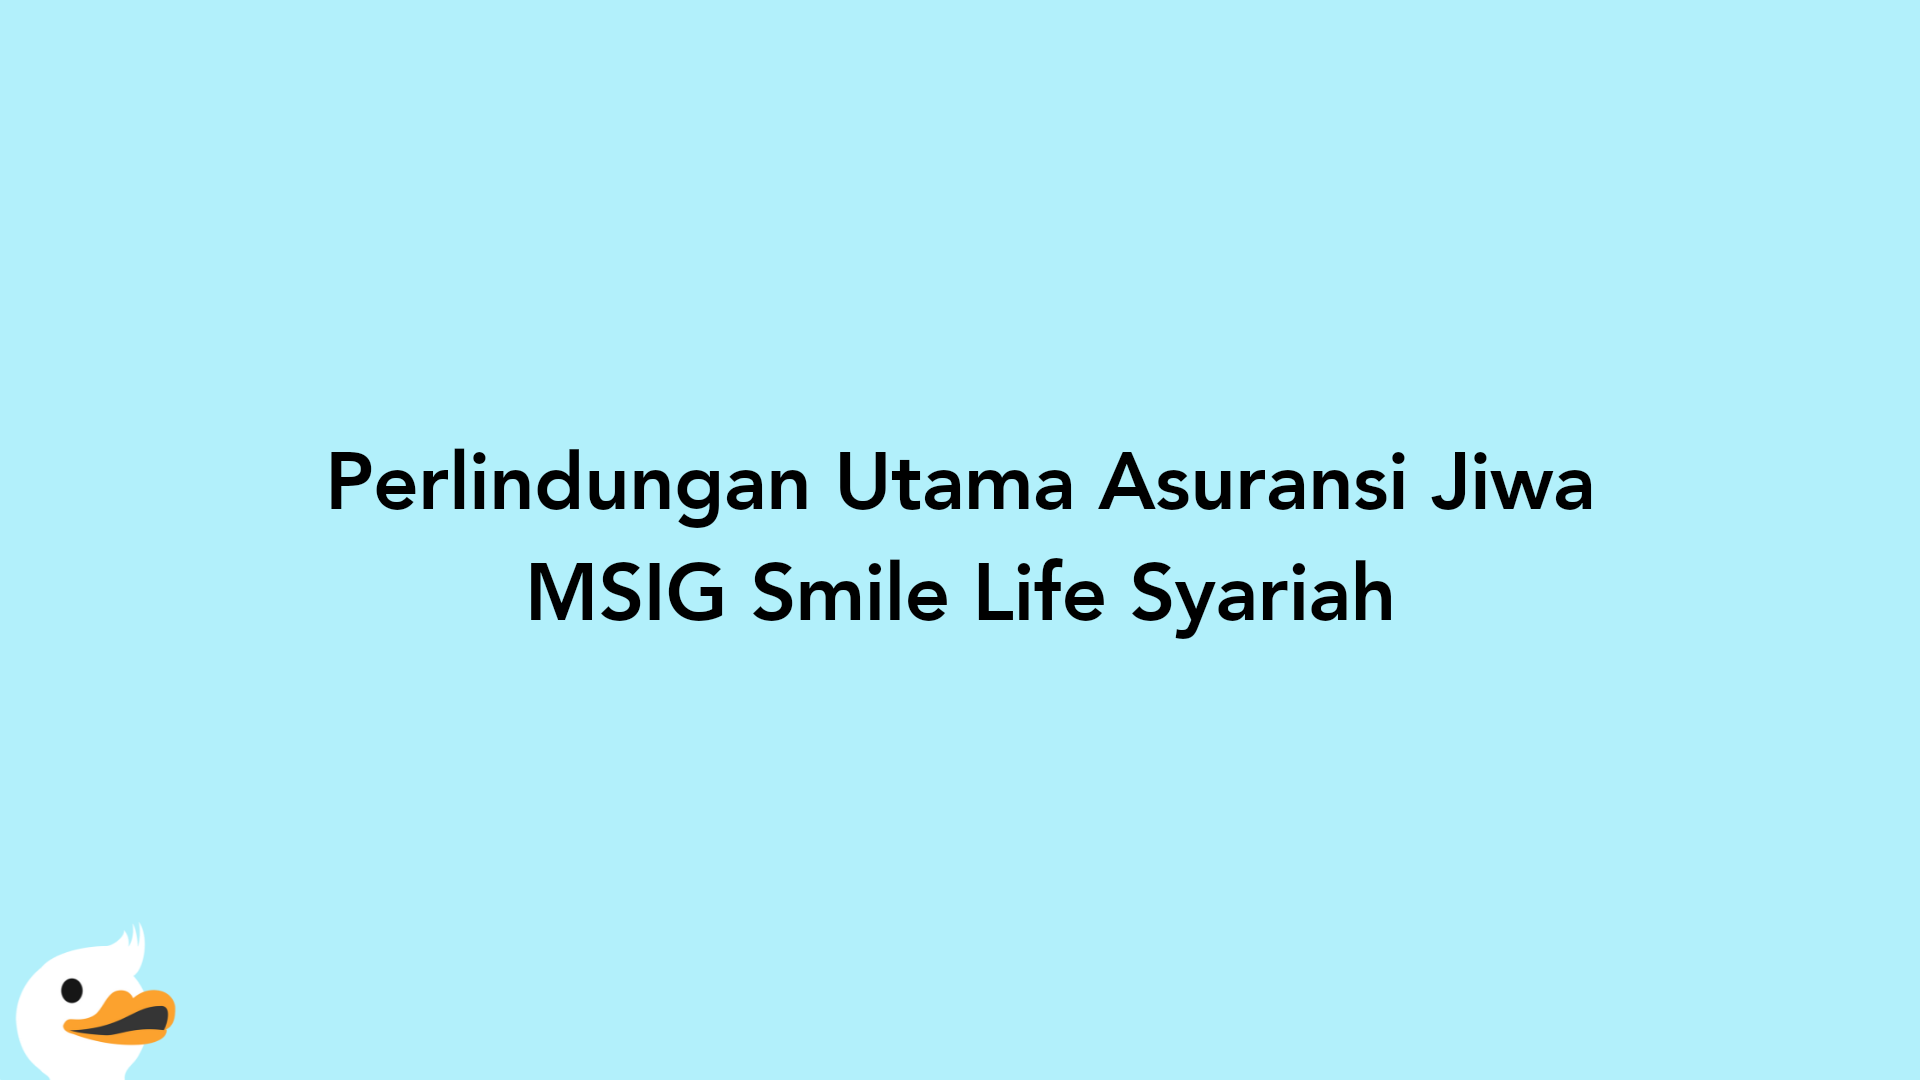 Perlindungan Utama Asuransi Jiwa MSIG Smile Life Syariah